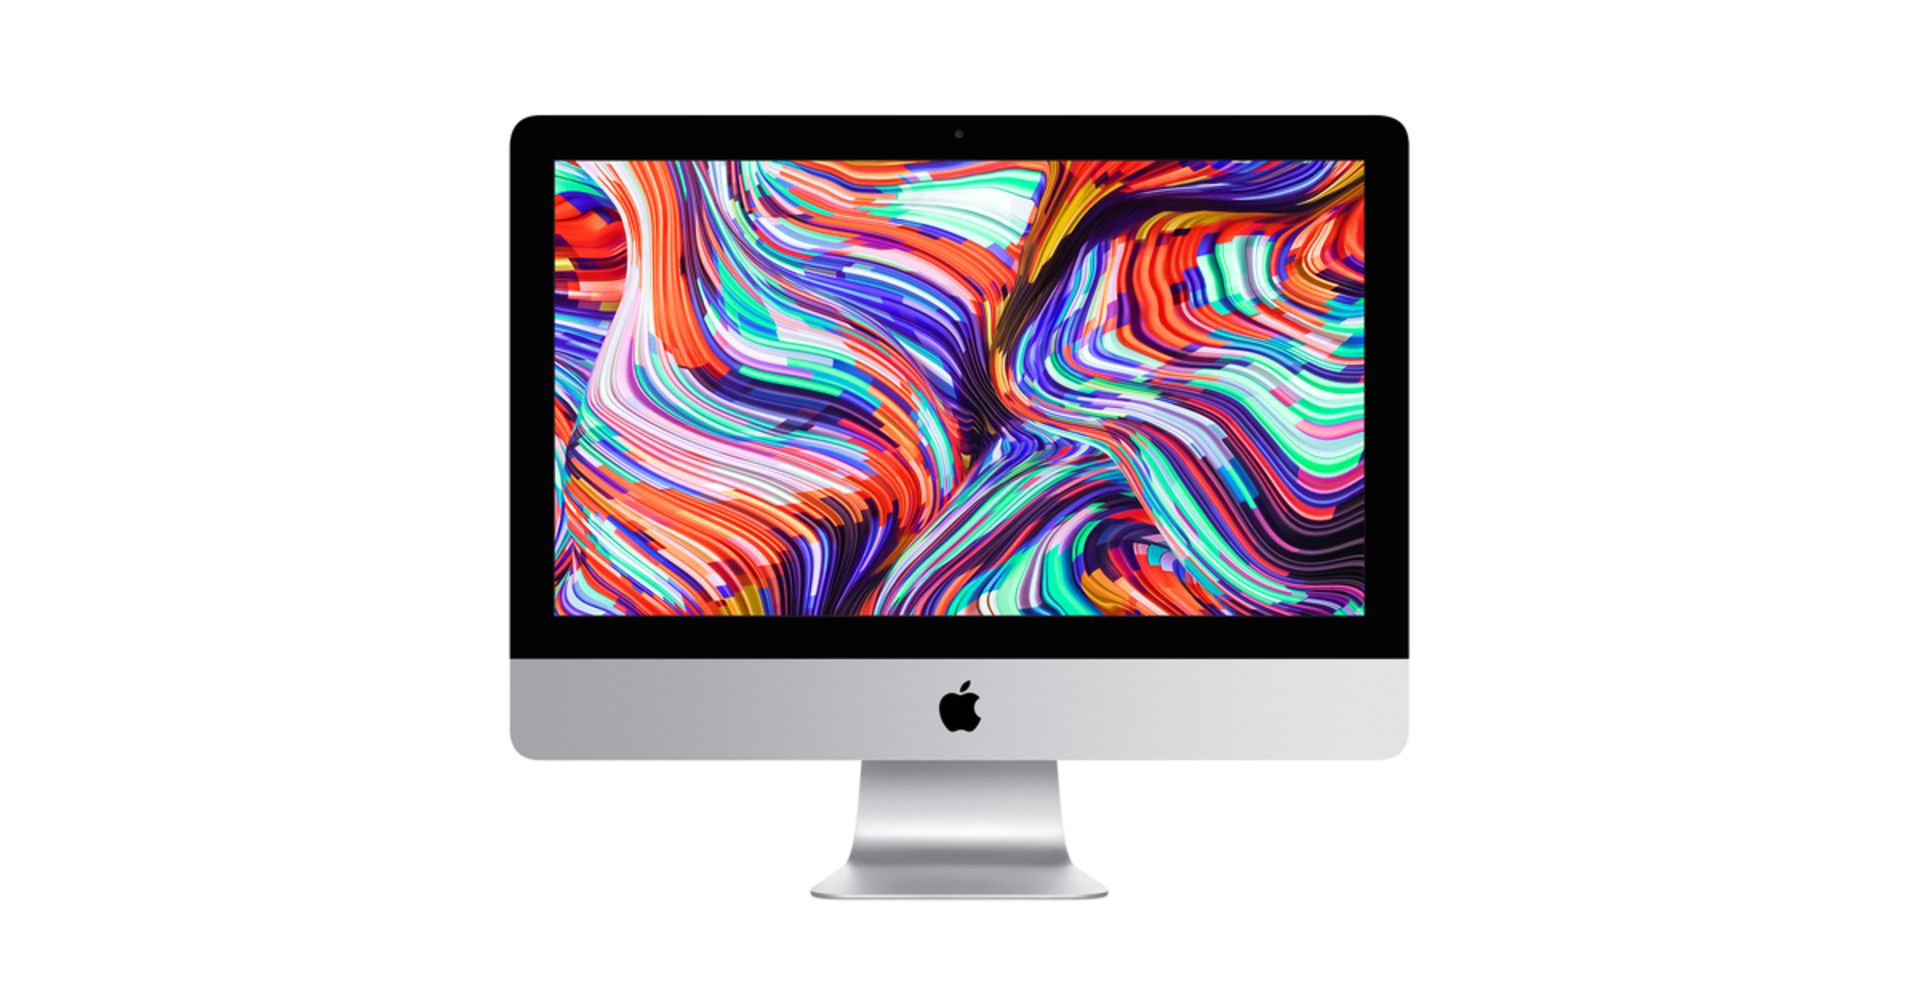 Apple iMac 21.5” OS X High Sierra Intel Core i3 4GB Memory 500GB HD Radeon WiFi Bluetooth Office